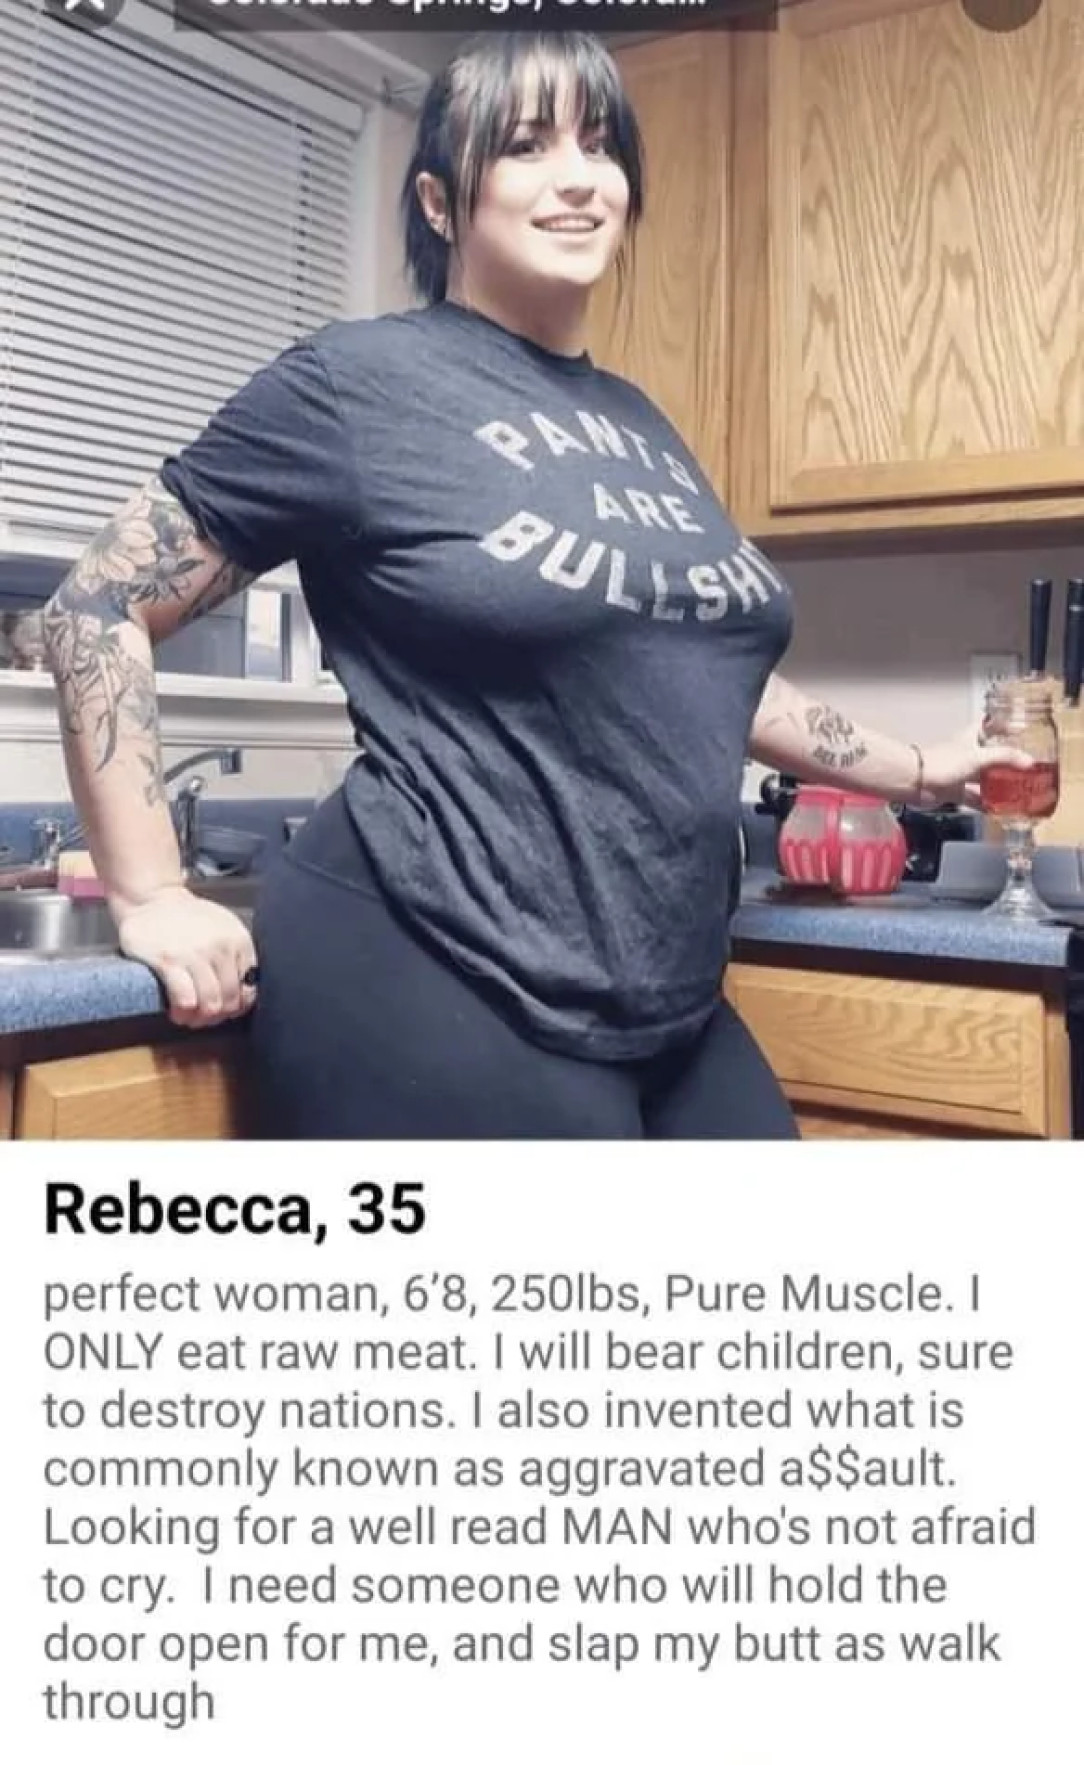 Rebecca, 35, pure muscle